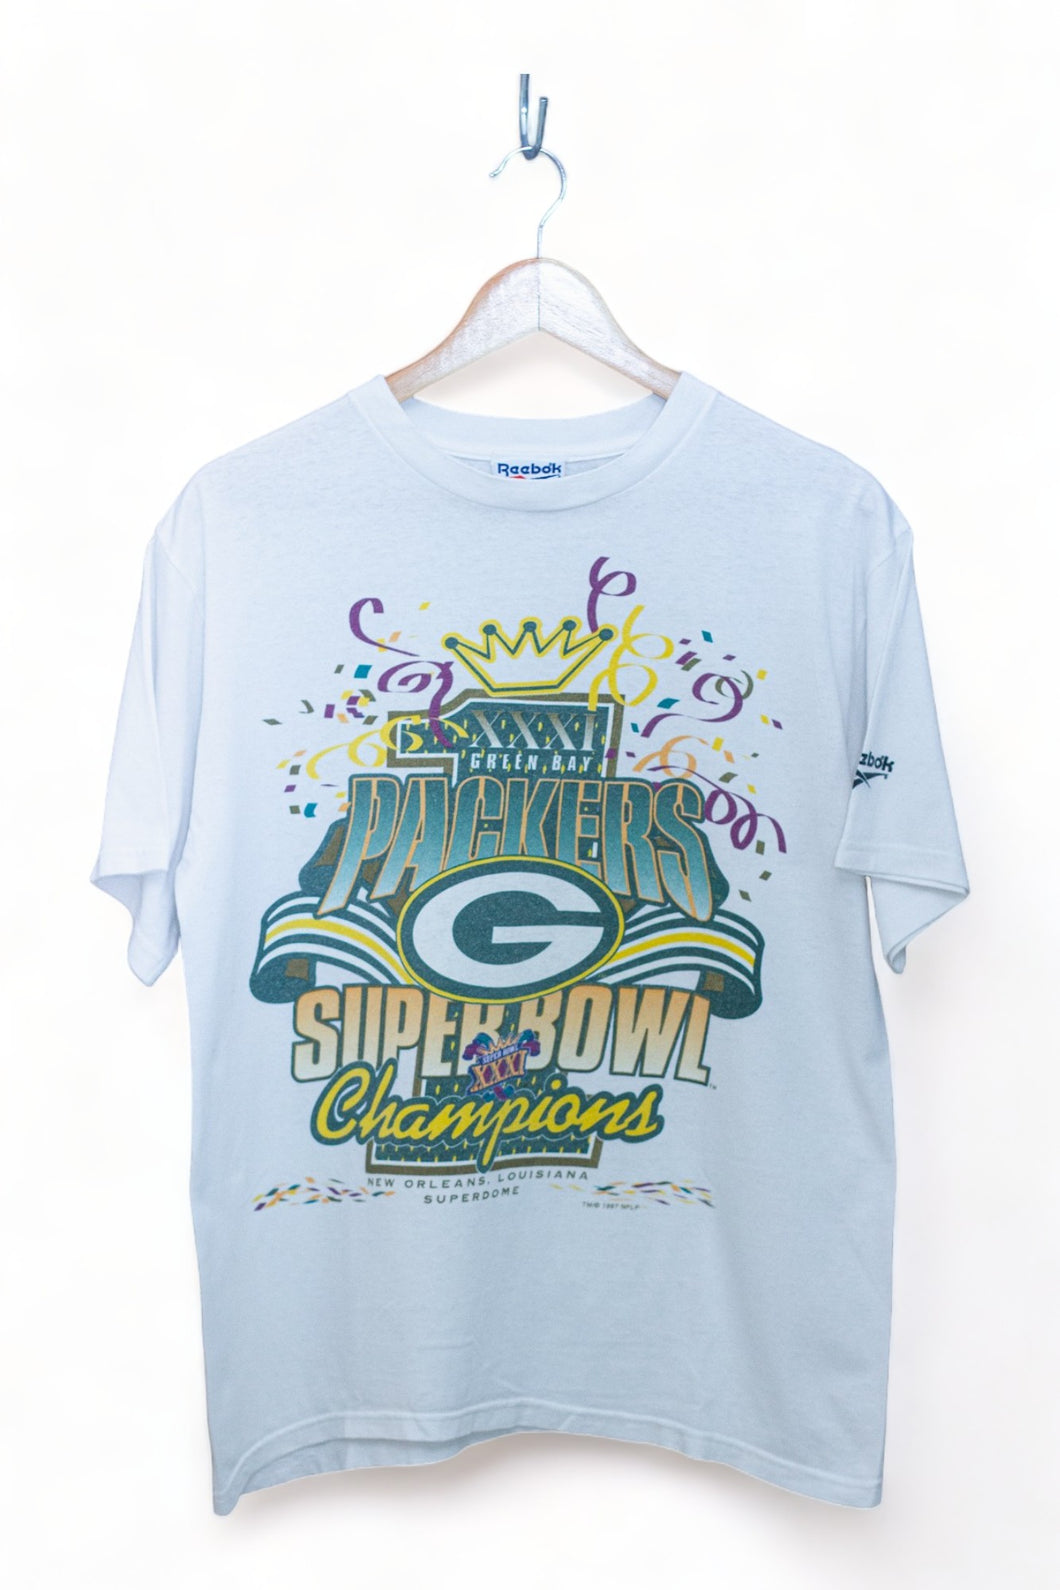 Green Bay Packers x Reebok - Super Bowl XXXI (1997) Champions T-Shirt (M)